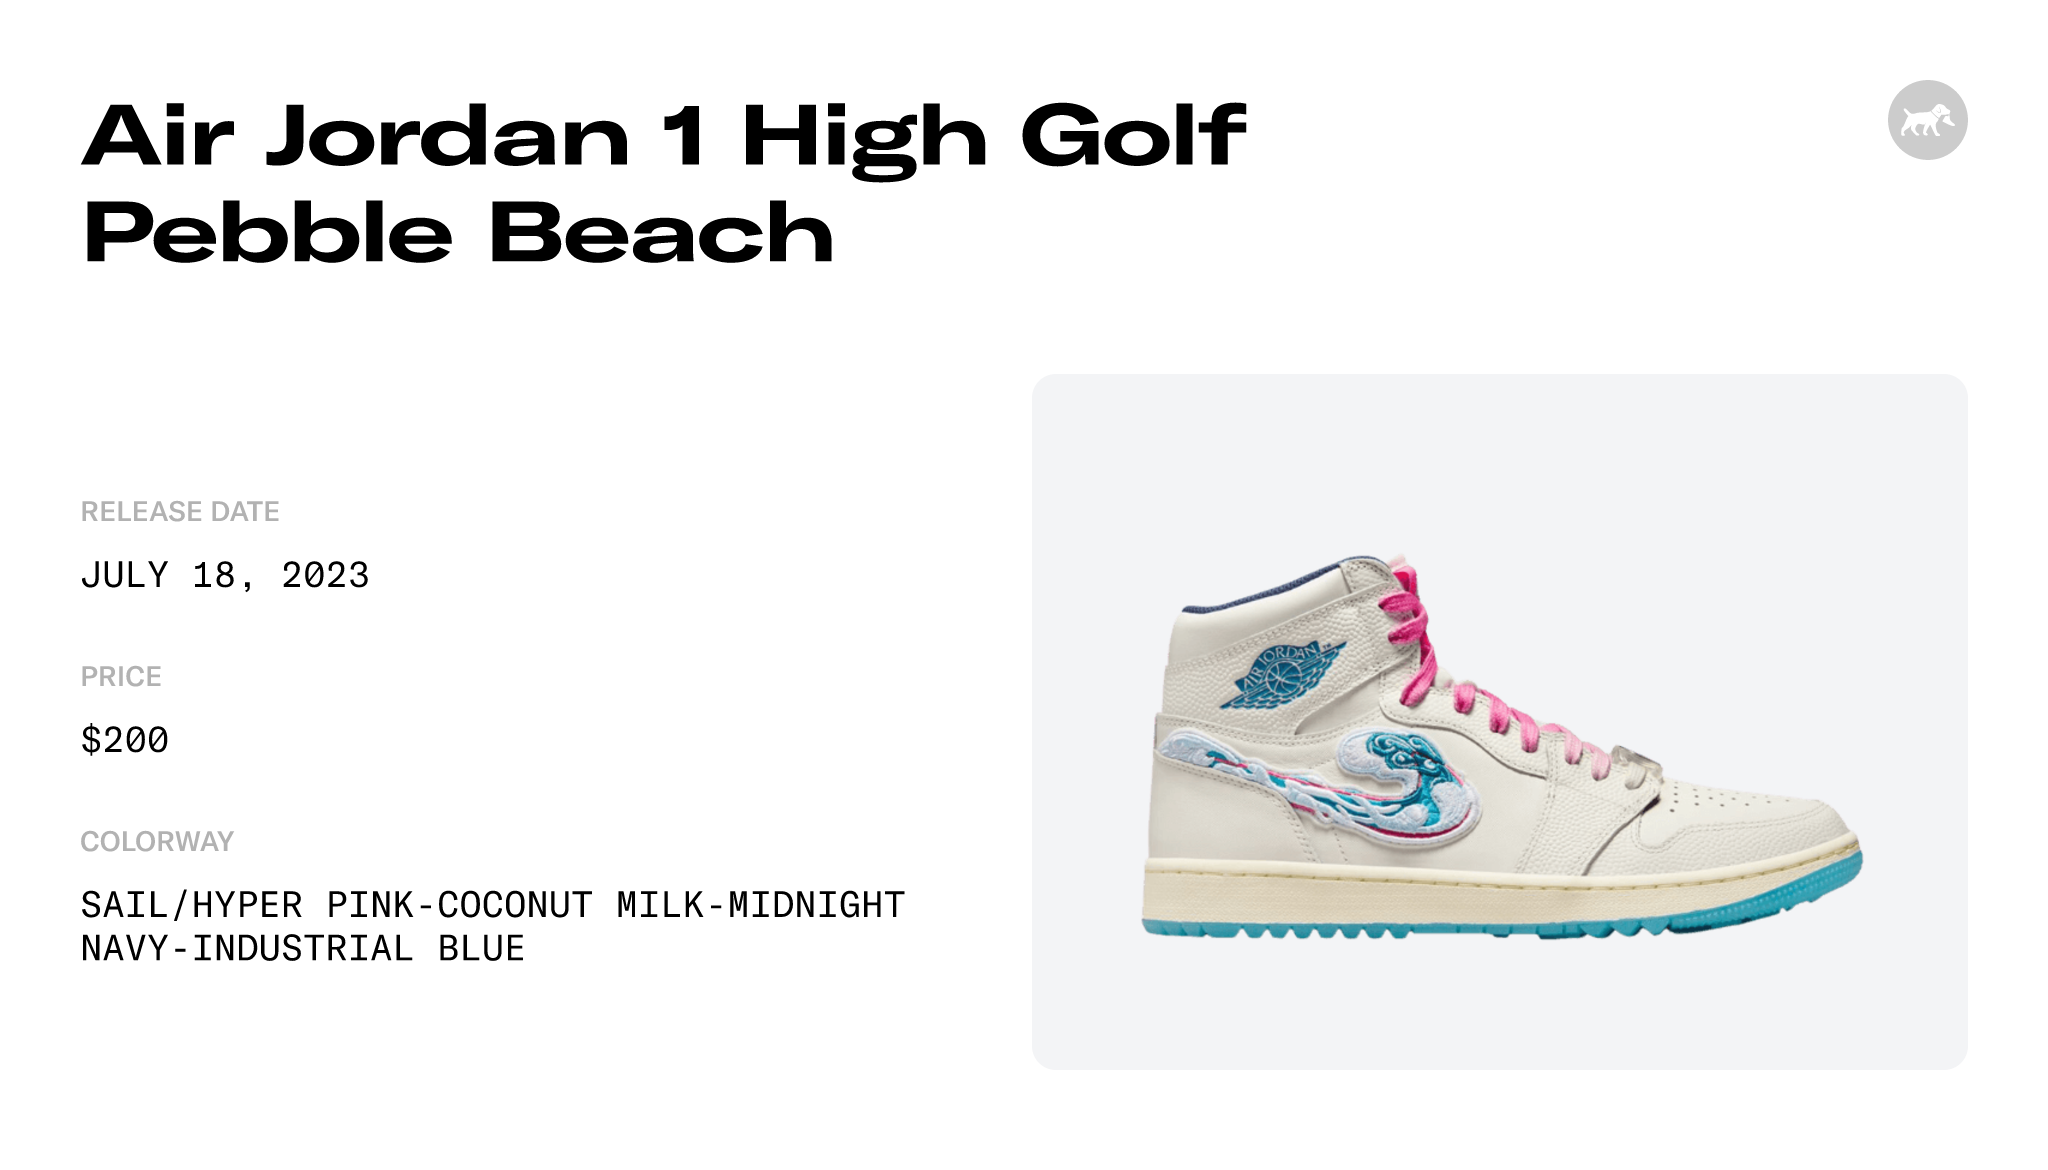 Air Jordan 1 High Golf NRG 2 Michelle Wie West Aloha